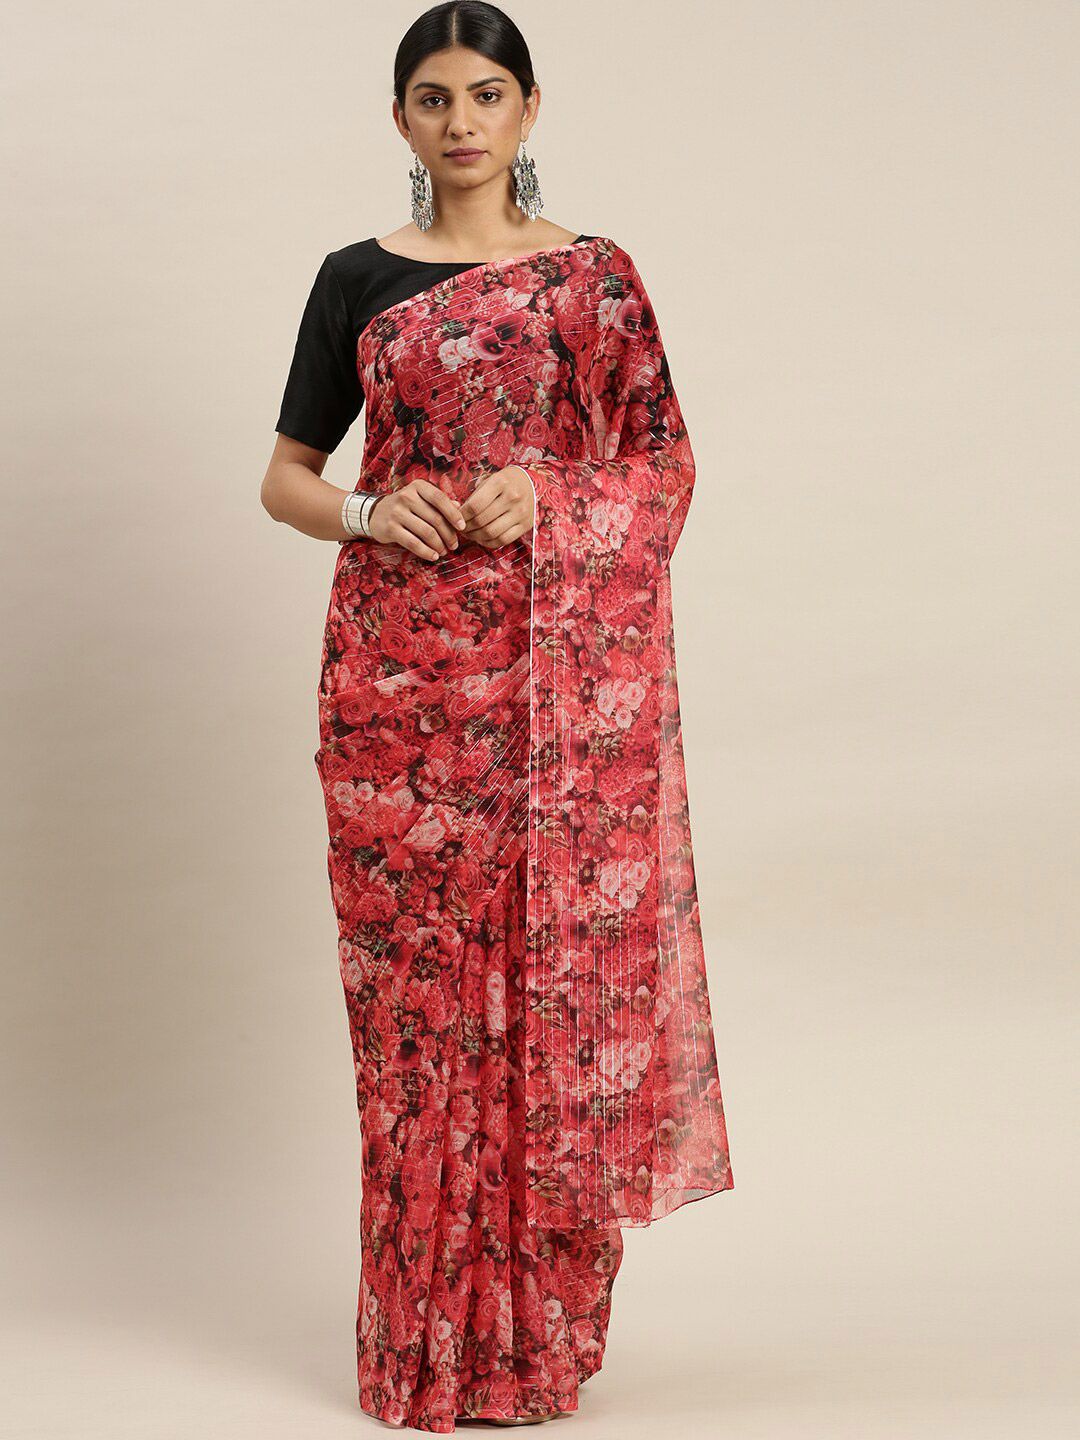 AVANSHEE Red & Black Floral Zari Saree Price in India